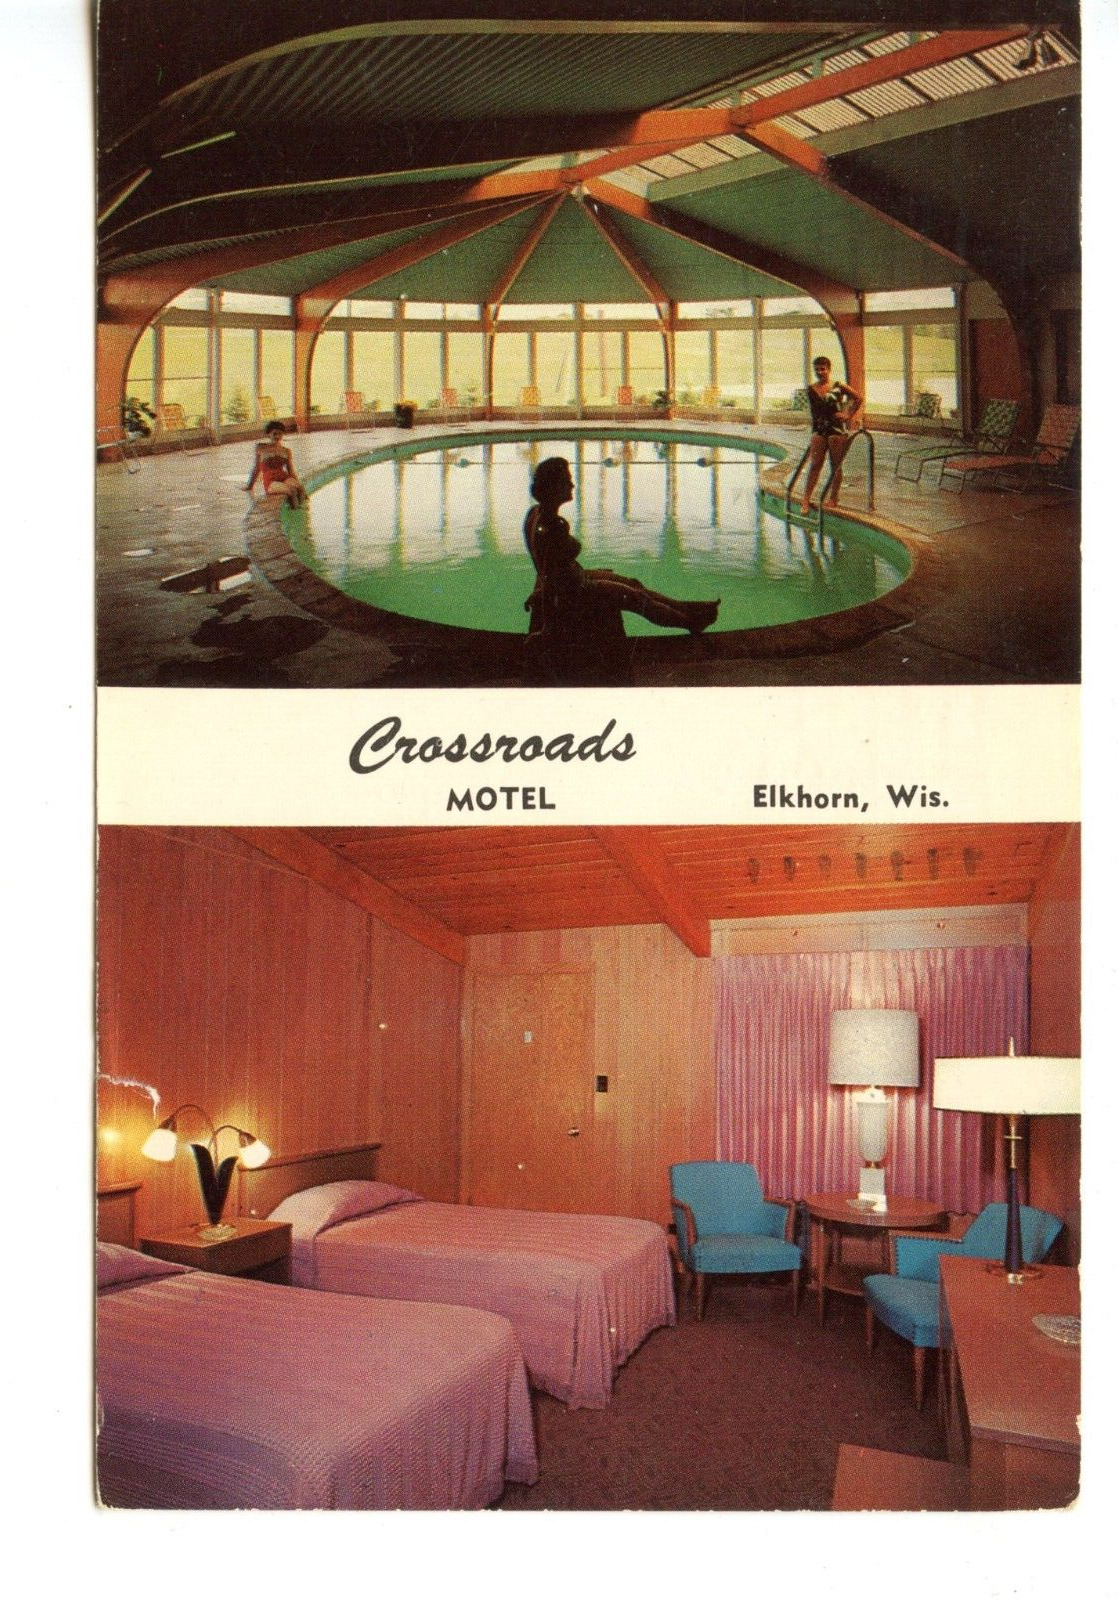 Guest Room-Pool-Crossroads Motel-Elkhorn-Wisconsin-Vintage 1960 Adv Postcard